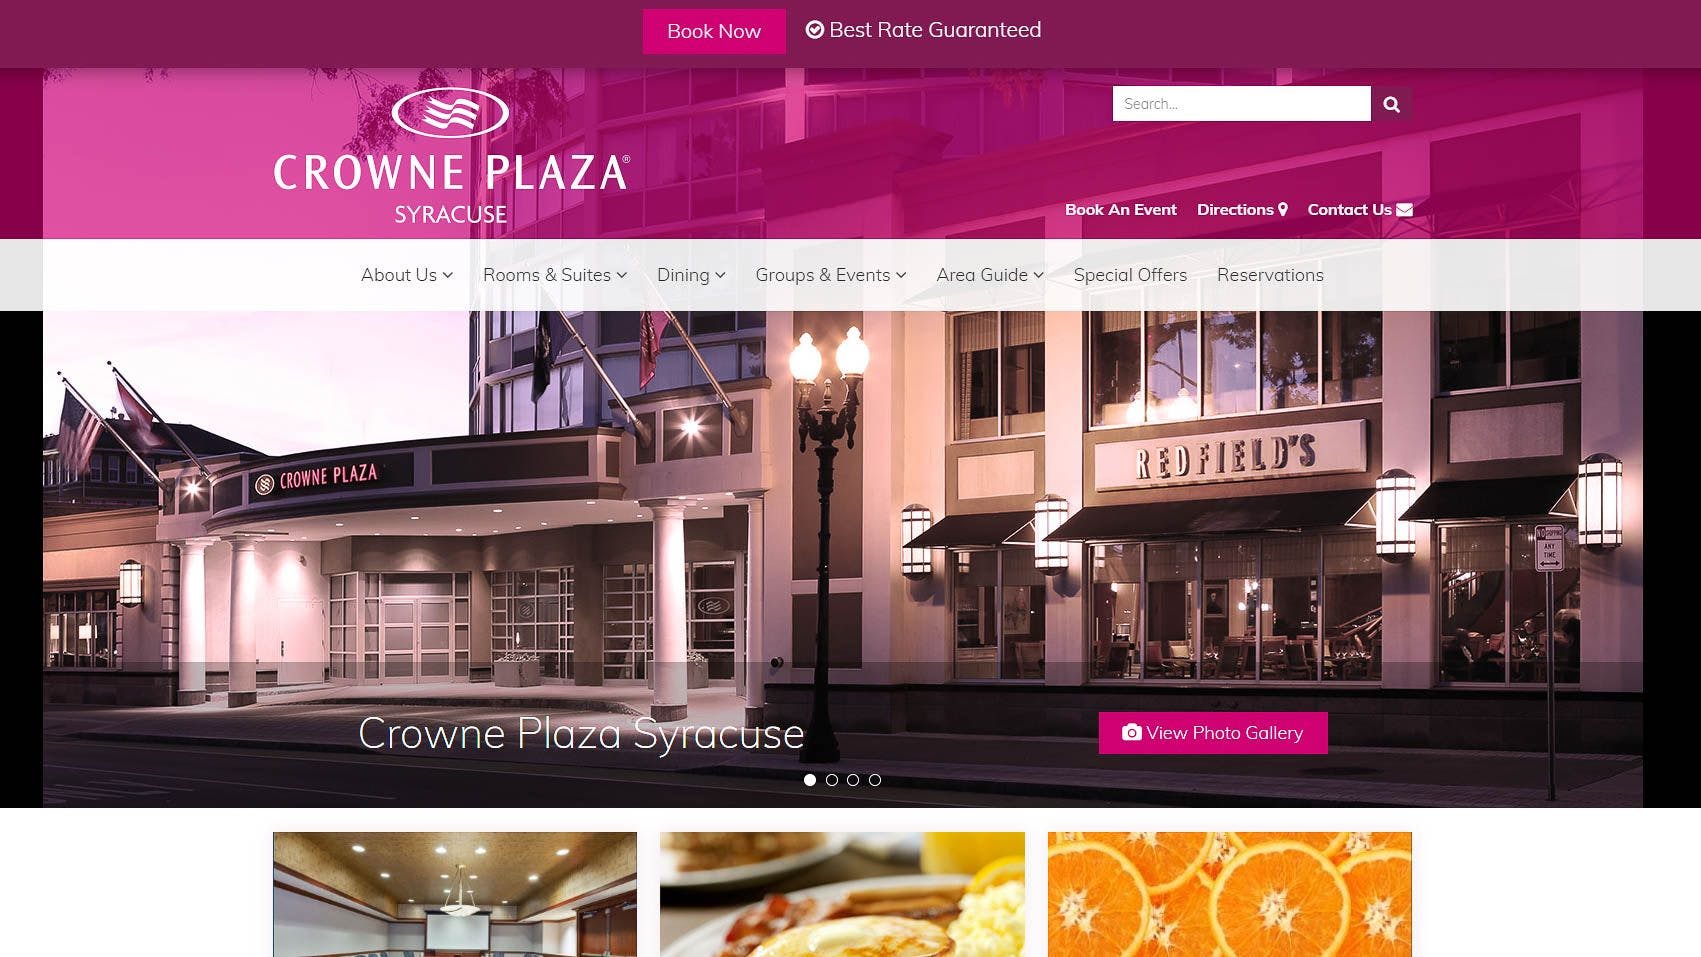 Crowne Plaza Hotel Website